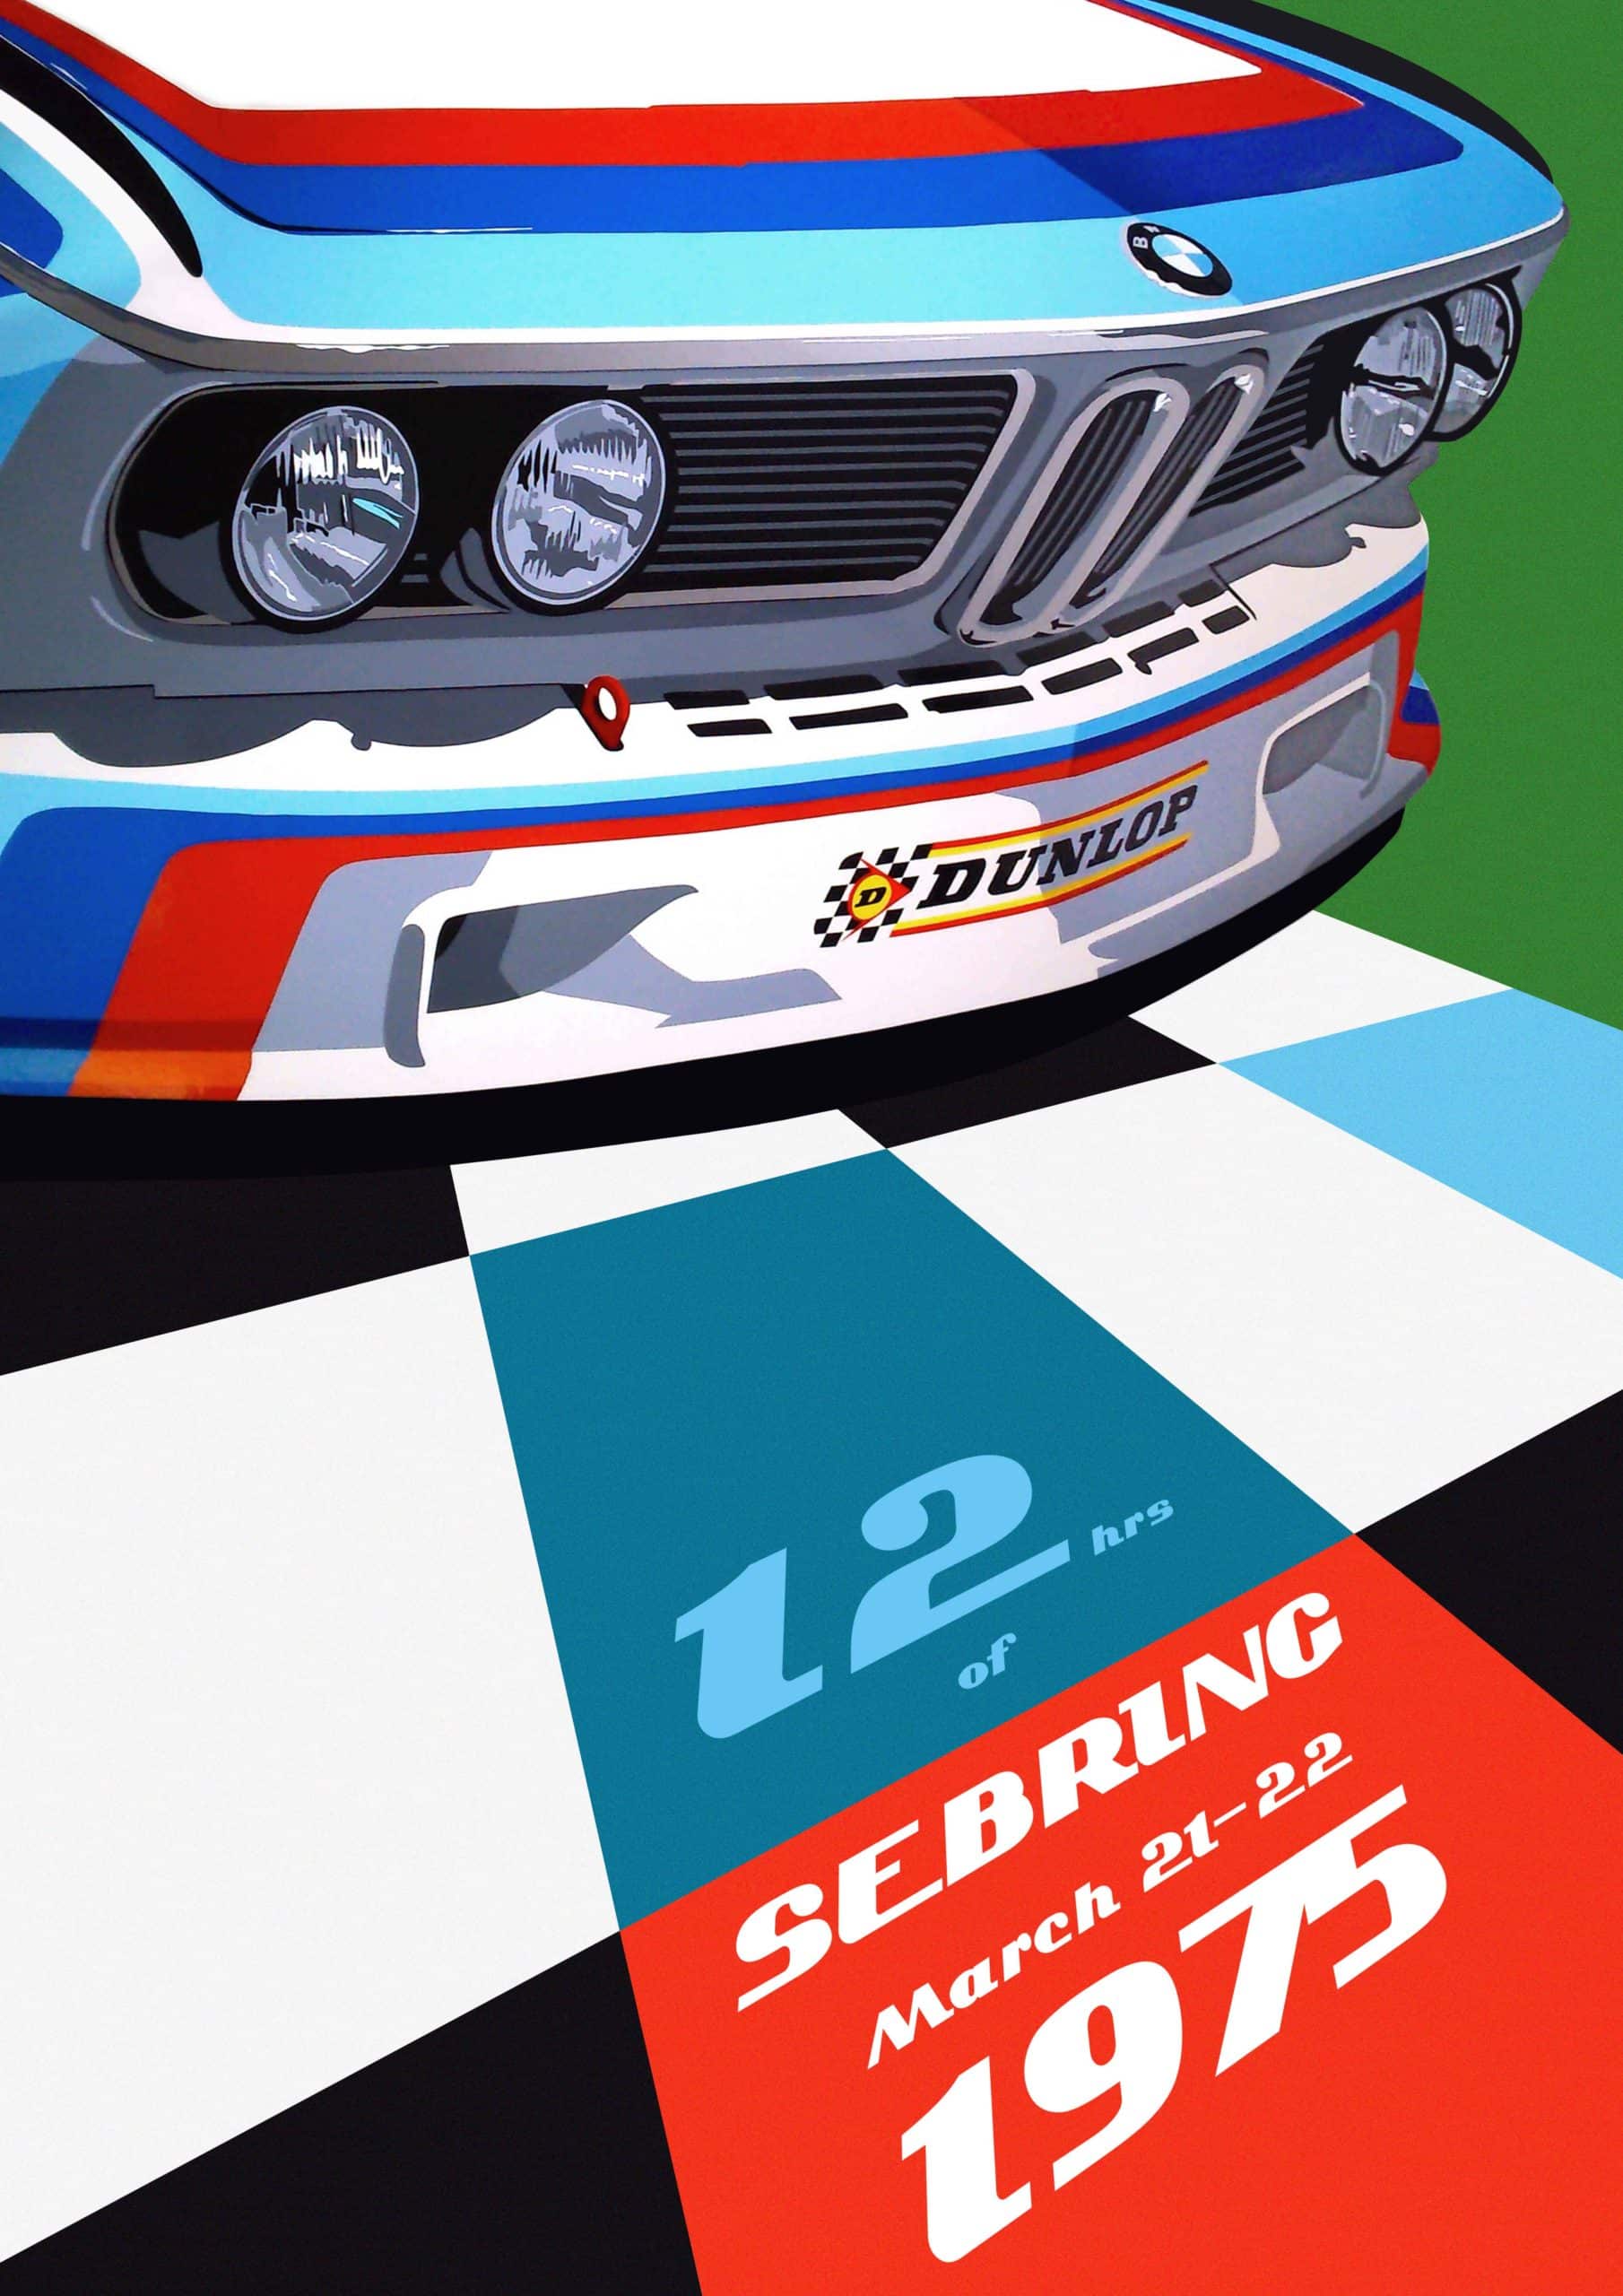 https://www.motorsportmagazine.com/wp-content/uploads/2022/02/BPC-Sebring-75-s-scaled.jpg